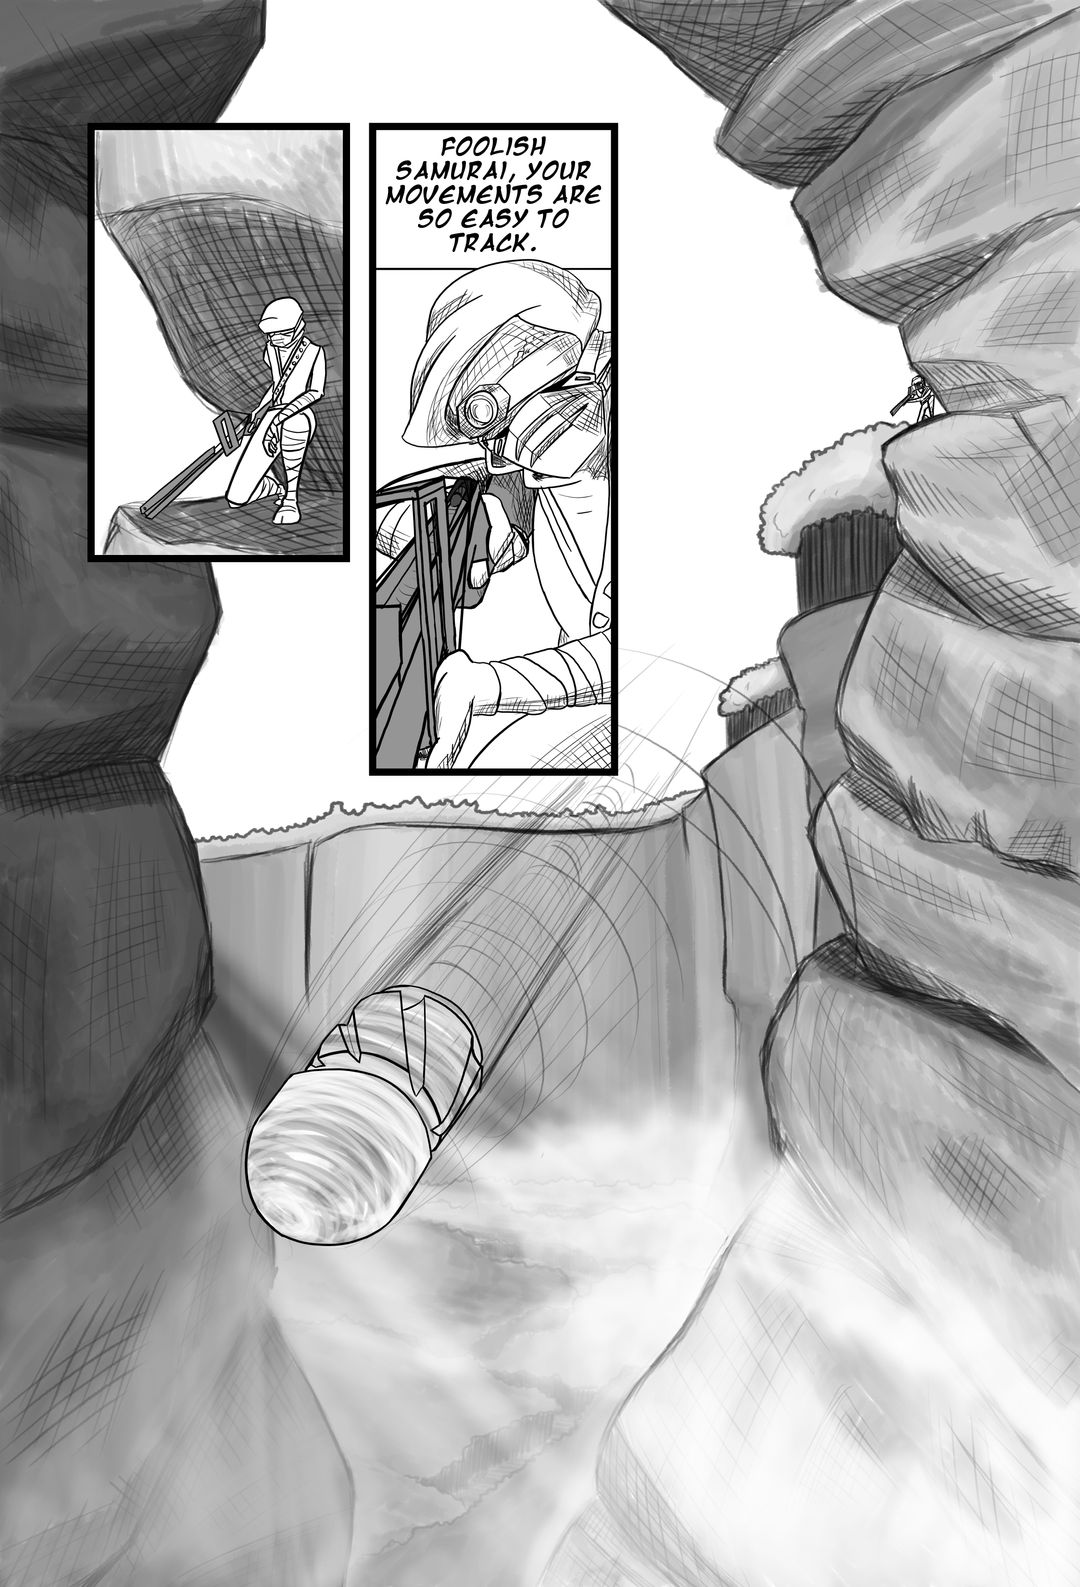 Shotgun Samurai 14 panel 4